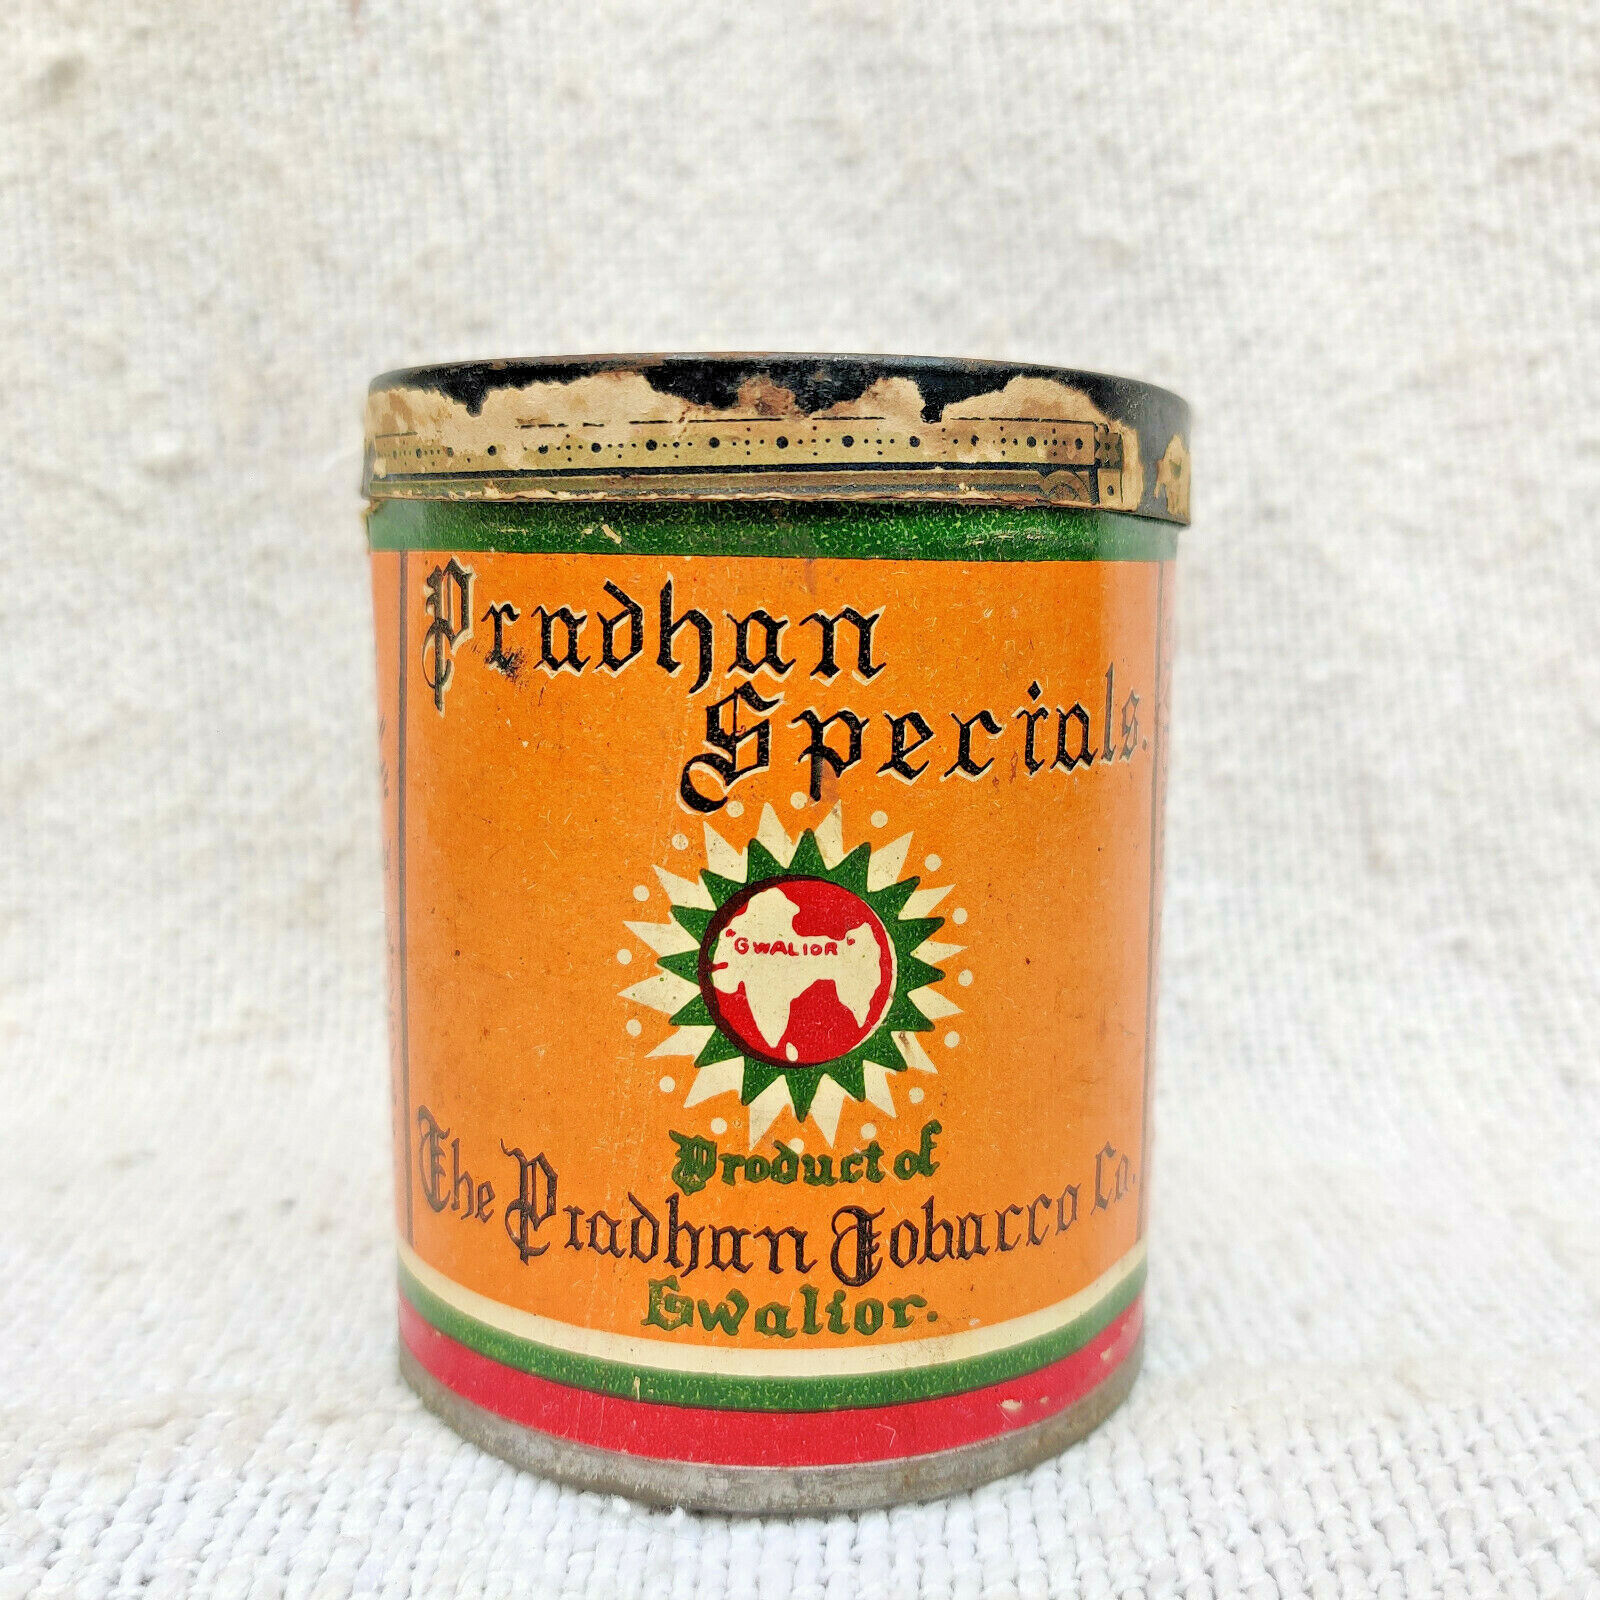 1930s Vintage Rare Pradhan Tobacco Co Cigarette Advertising Tin Box Round CG16